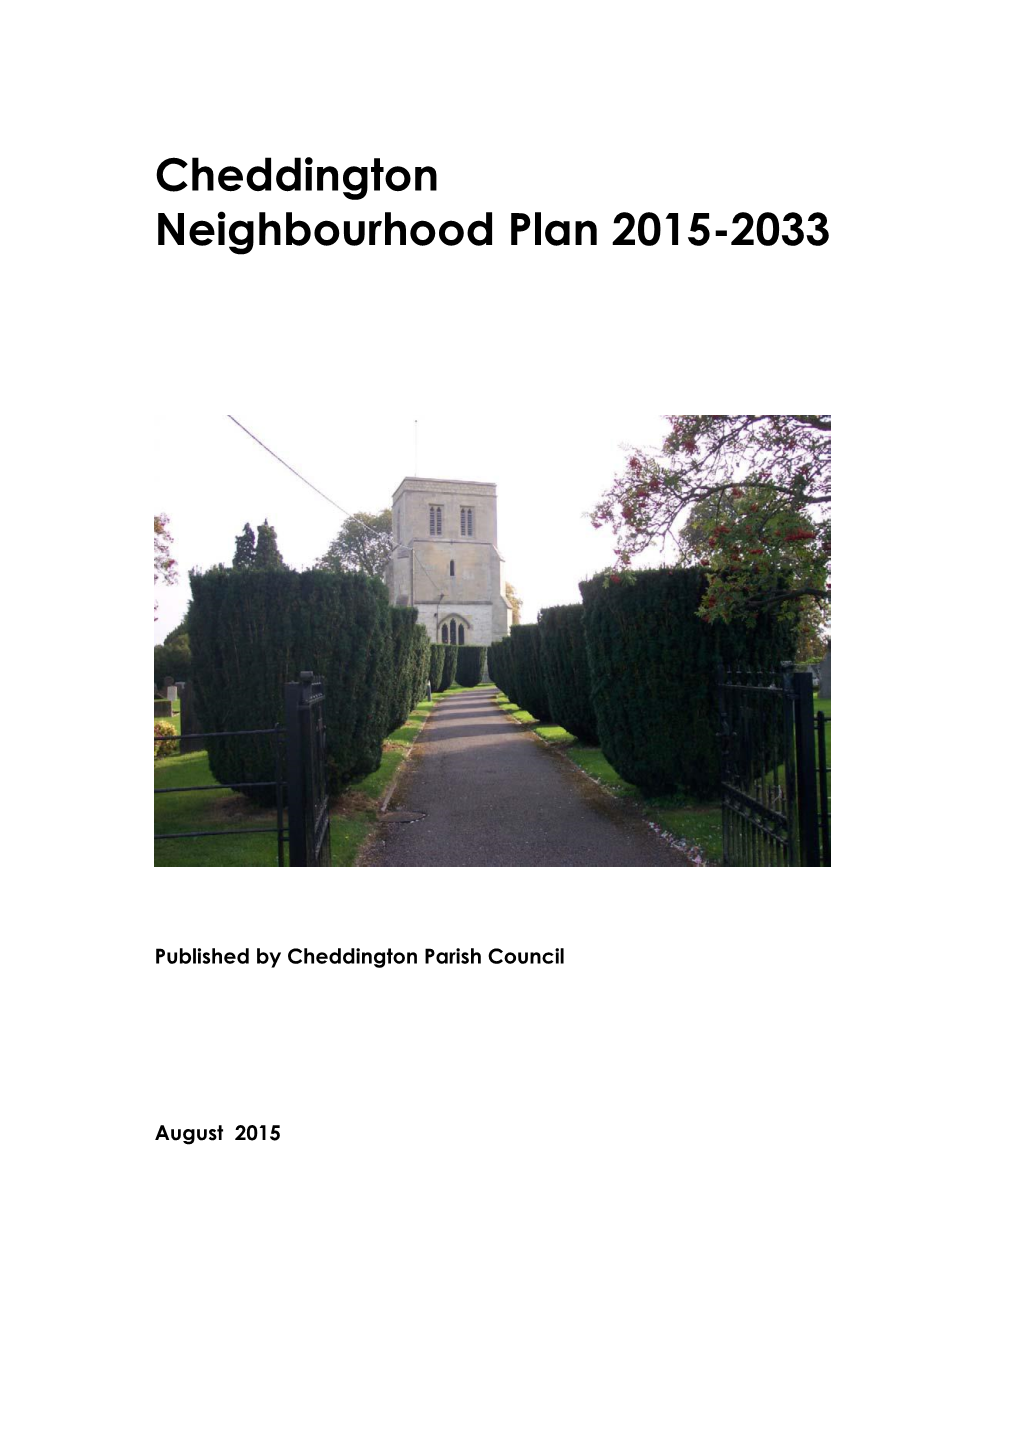 Cheddington NP Pre Sub Plan 2014